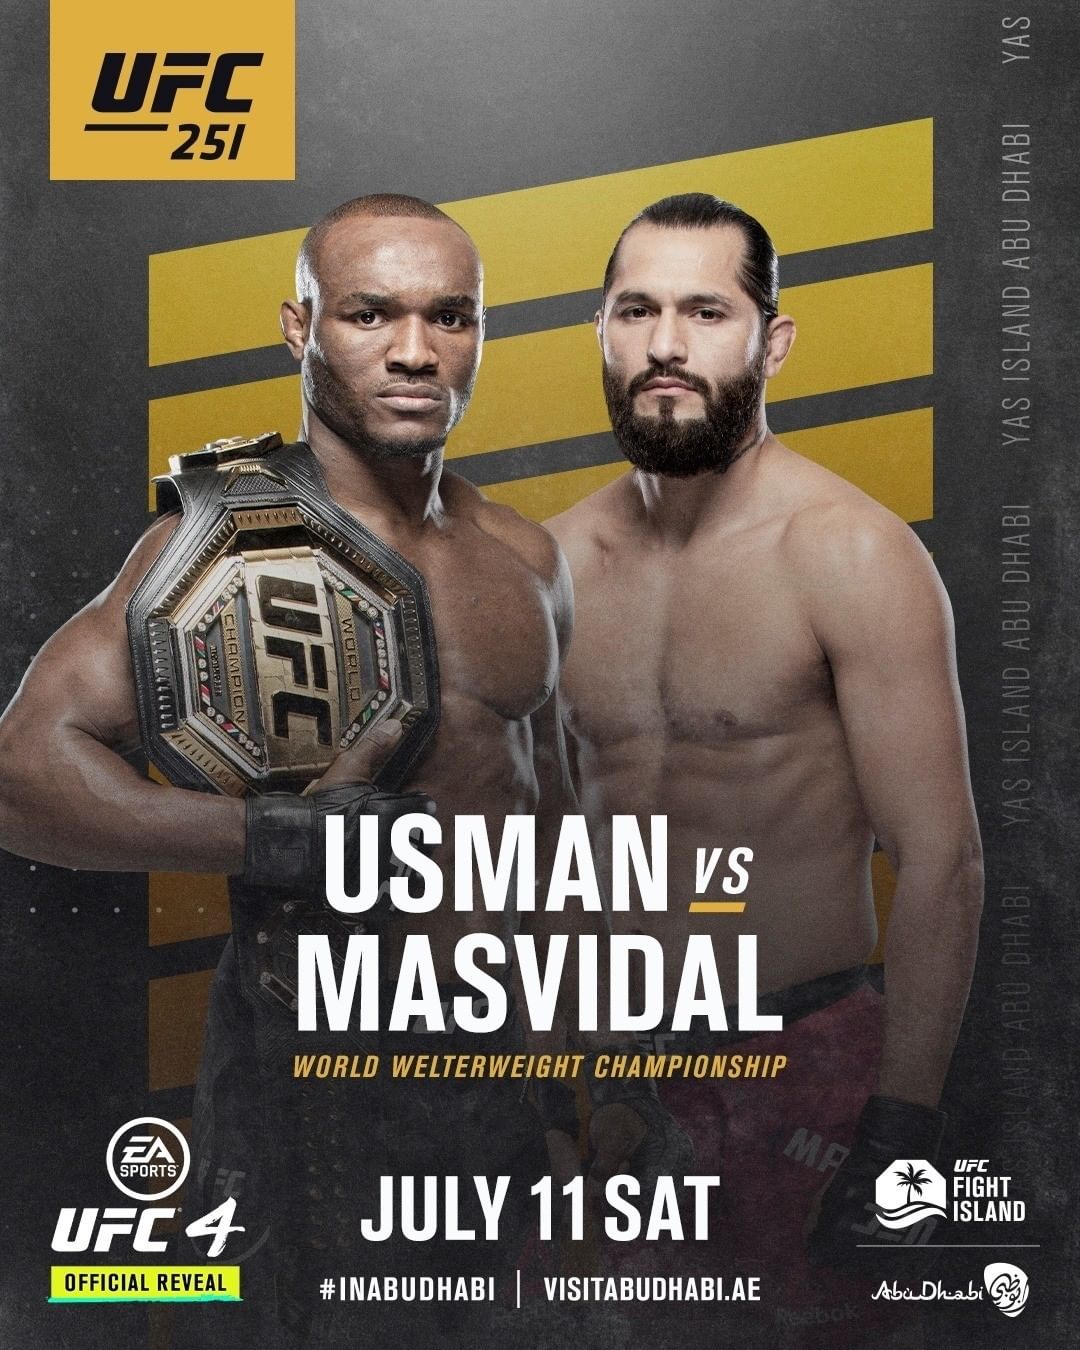 Kamaru Usman vs. Jorge Masvidal - Fight Preview & Analysis